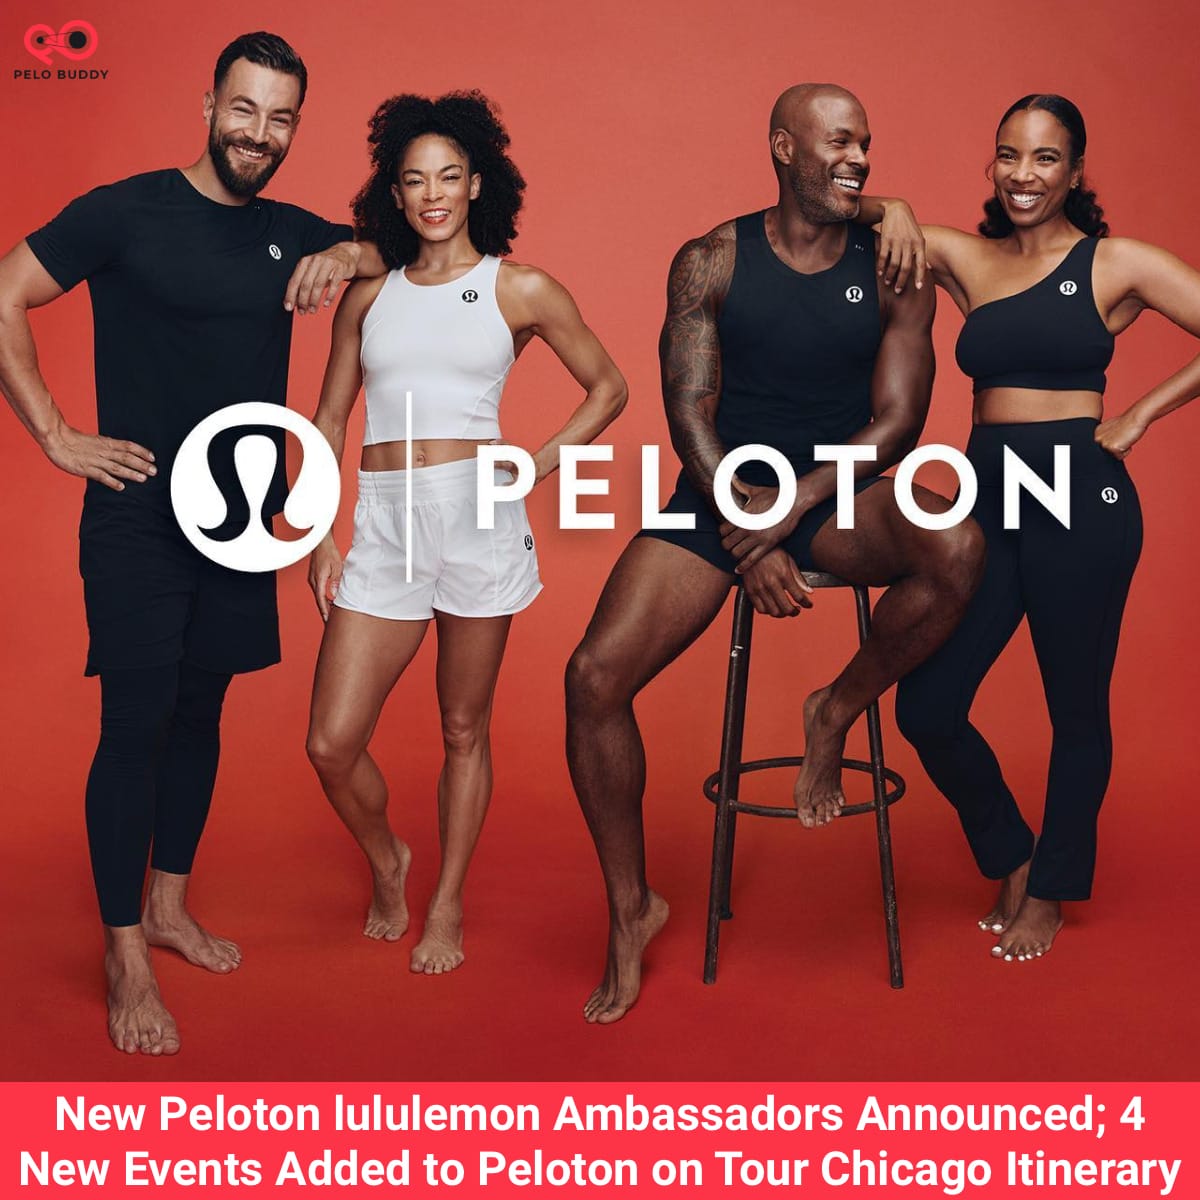 Peloton & lululemon Announce 5 Year Global Strategic Partnership - Peloton  Buddy